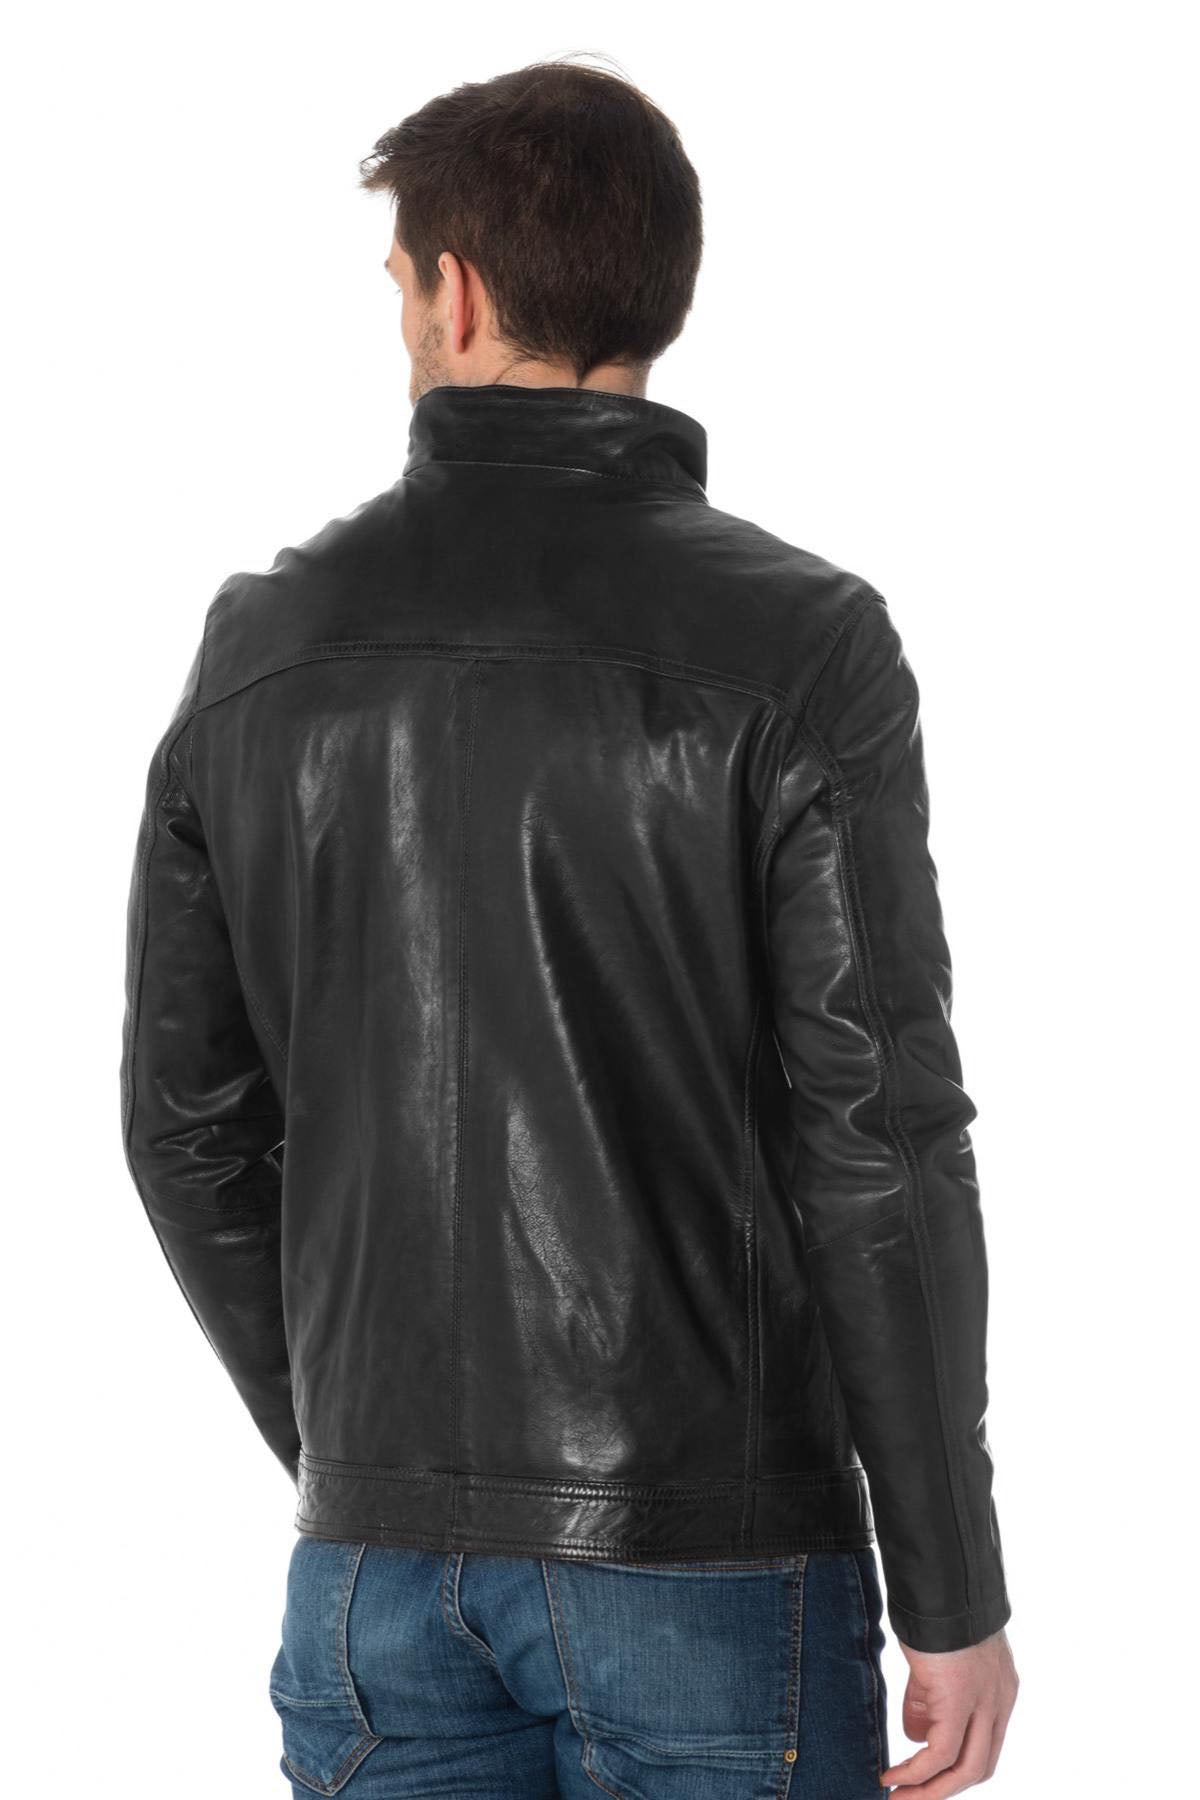 Men Genuine Leather Jacket MJ 74 SkinOutfit